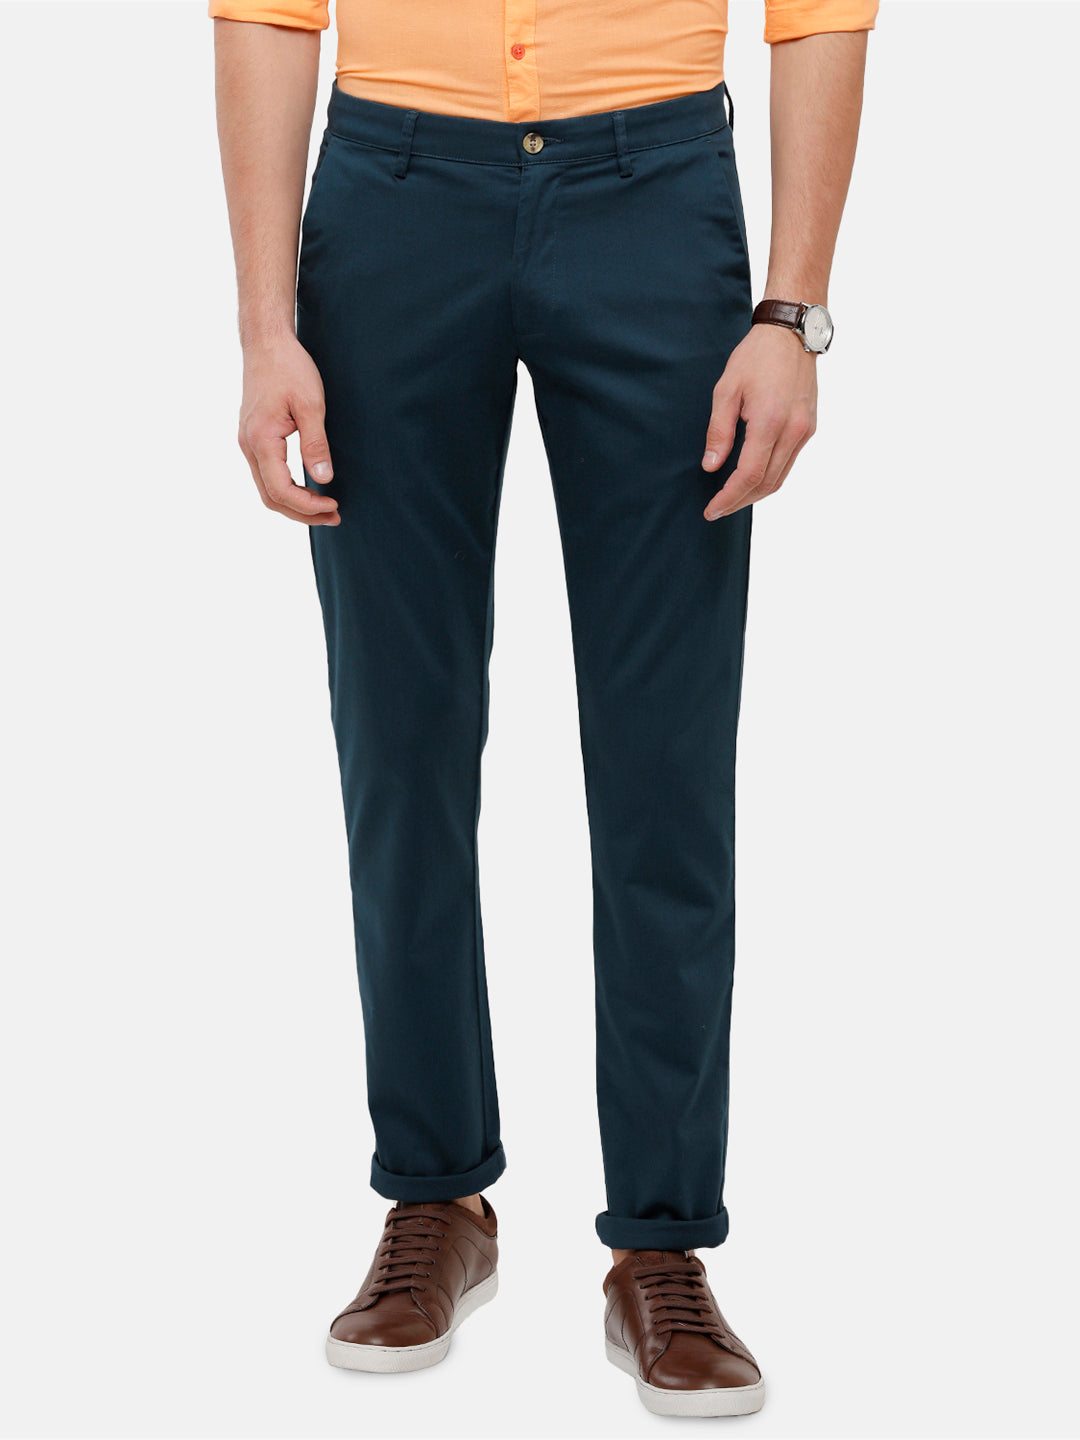 Polo Ralph Lauren Chino Pants Tan Stretch Classic Fit Men's Size 36x30 |  eBay